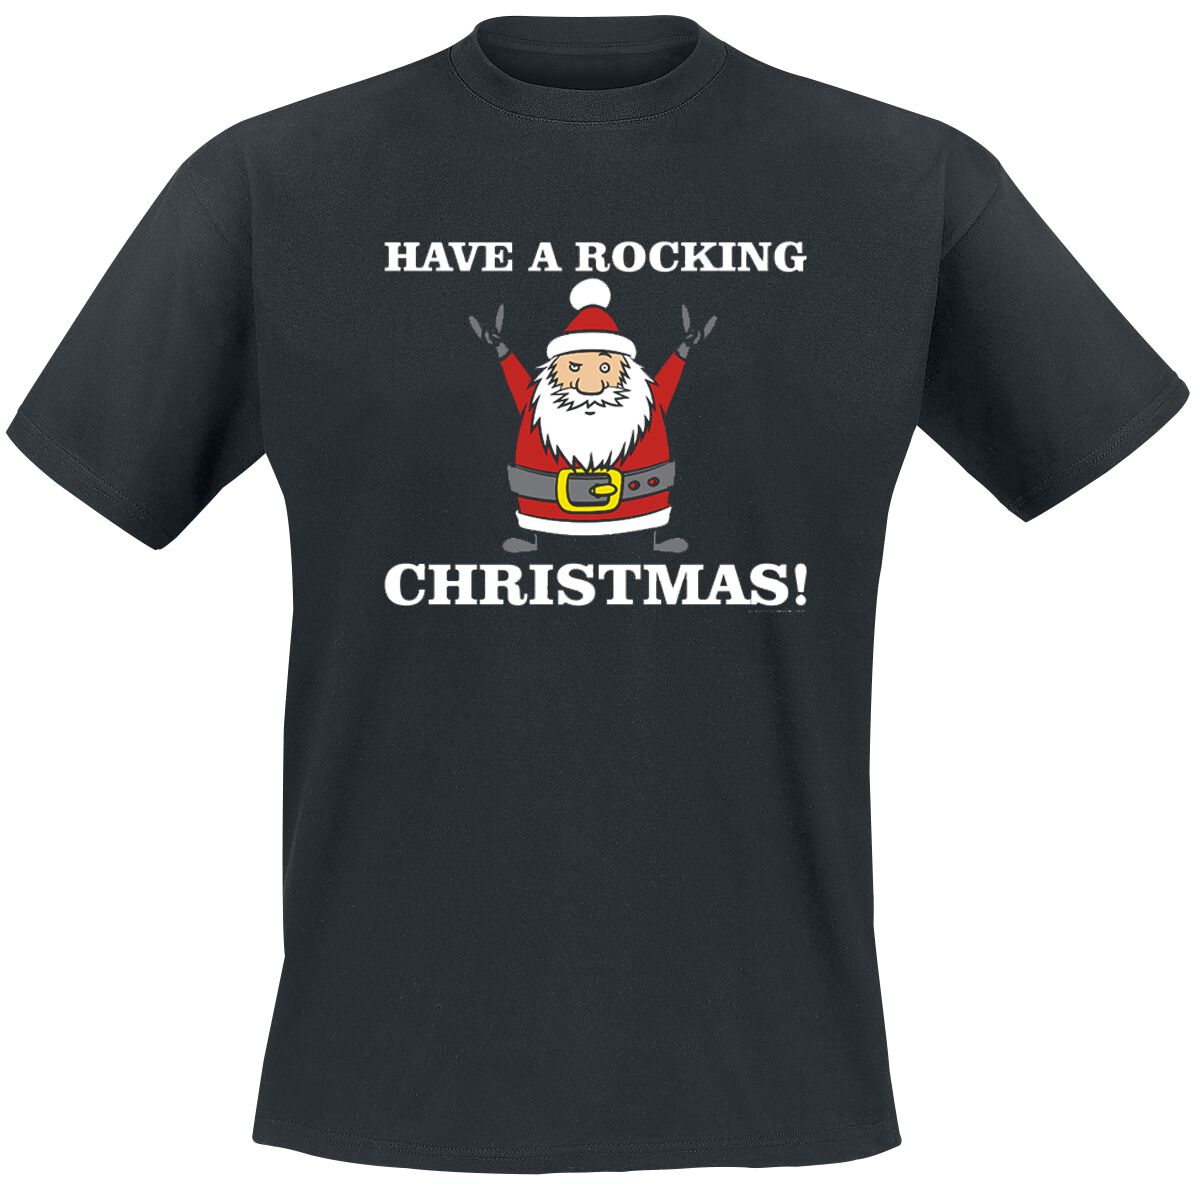 Slogans Have A Rocking Christmas! T-Shirt black